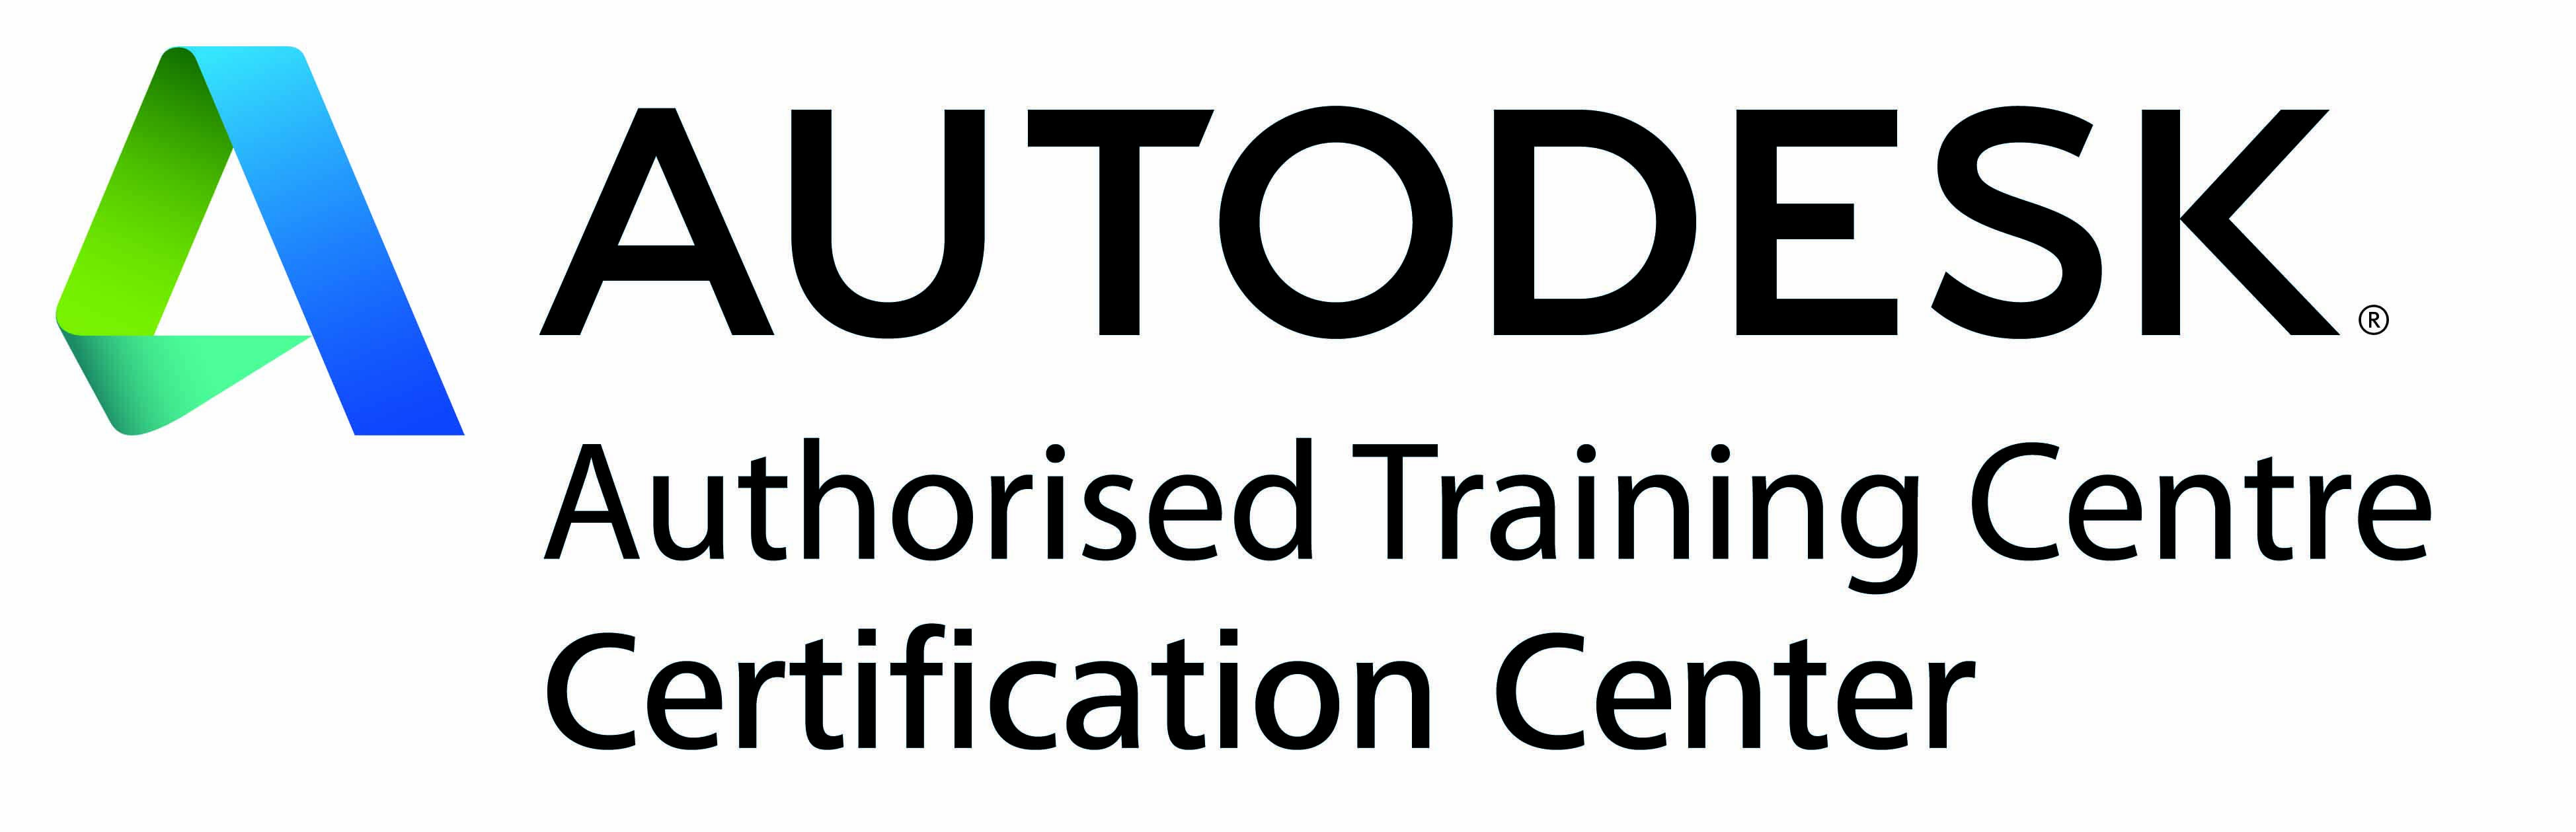 Autodesk Logo - CLS Training Center